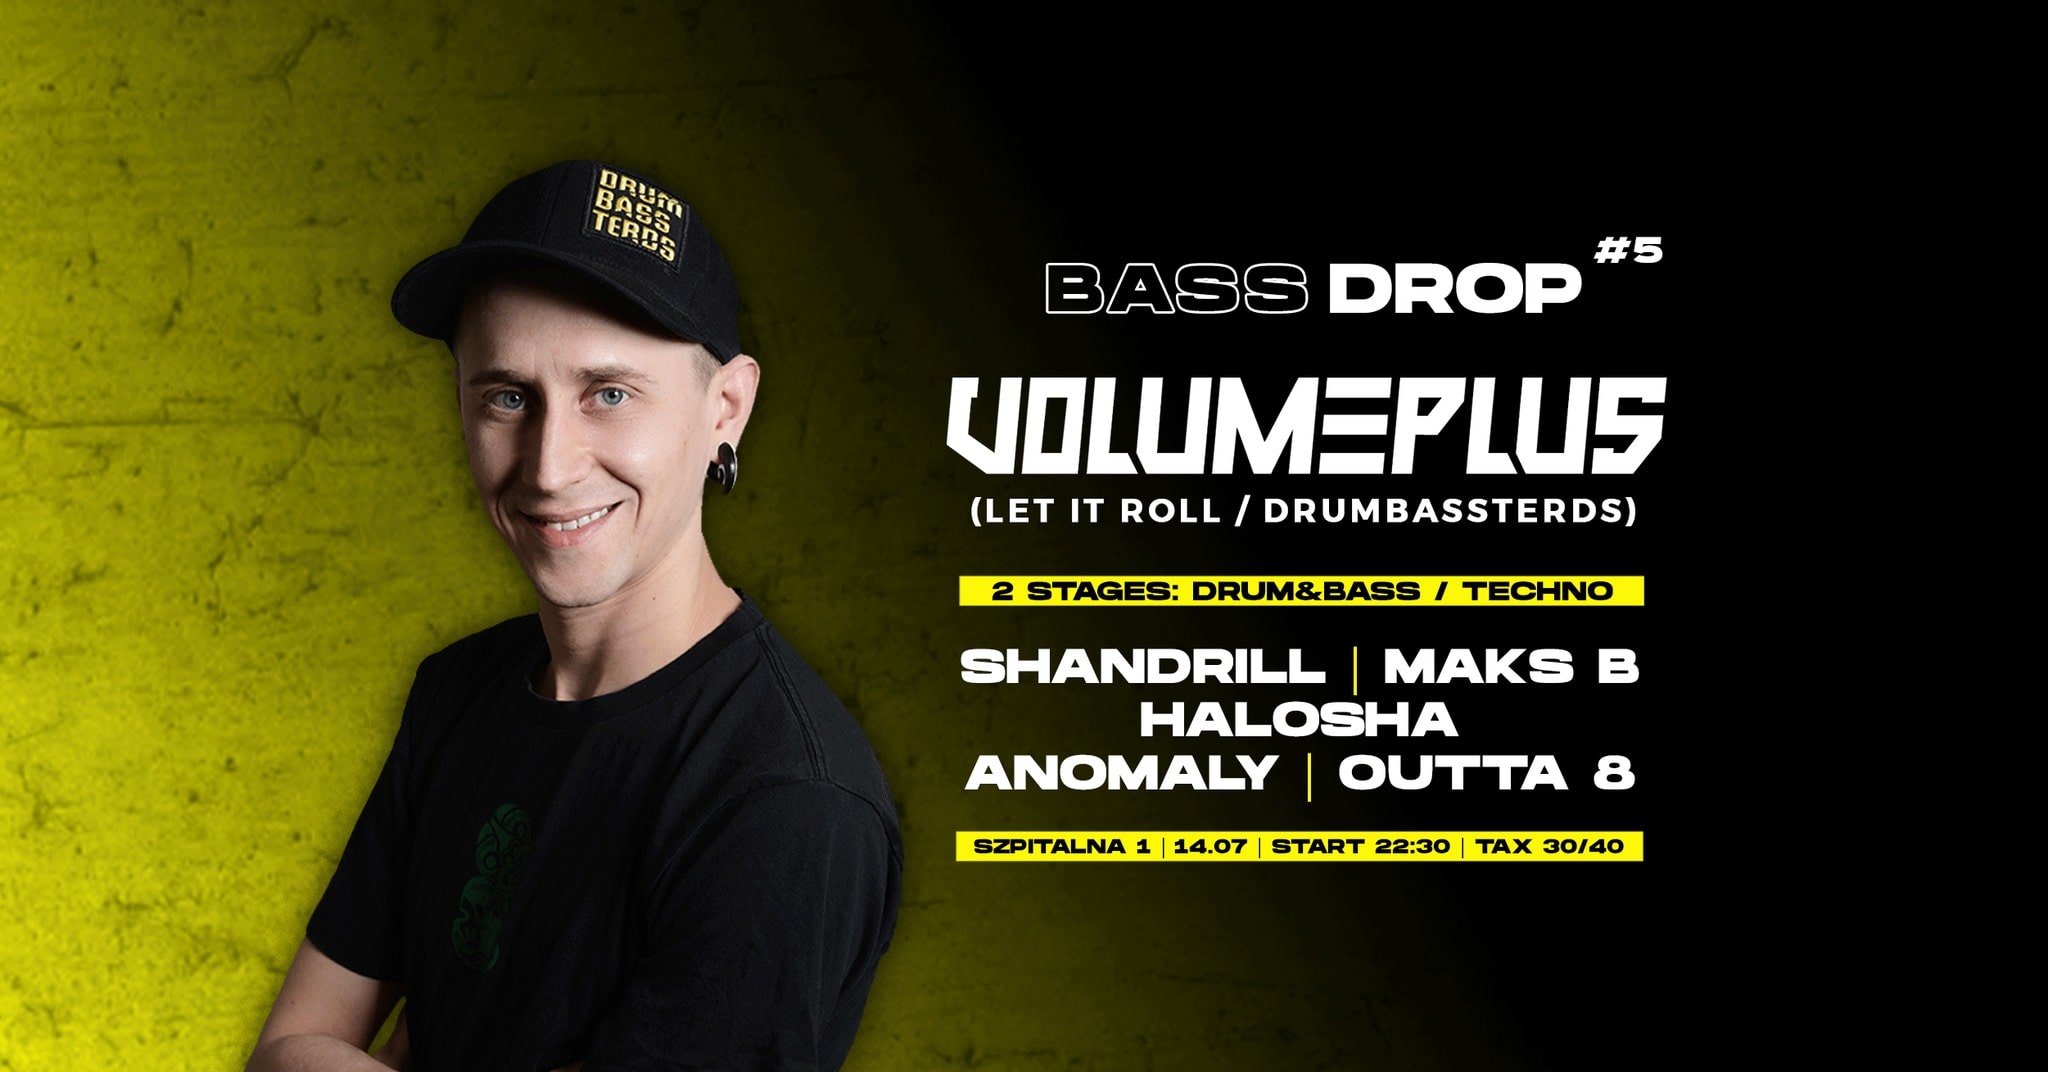 BASS DROP: Volume Plus (Let it Roll / Drumbassterds)